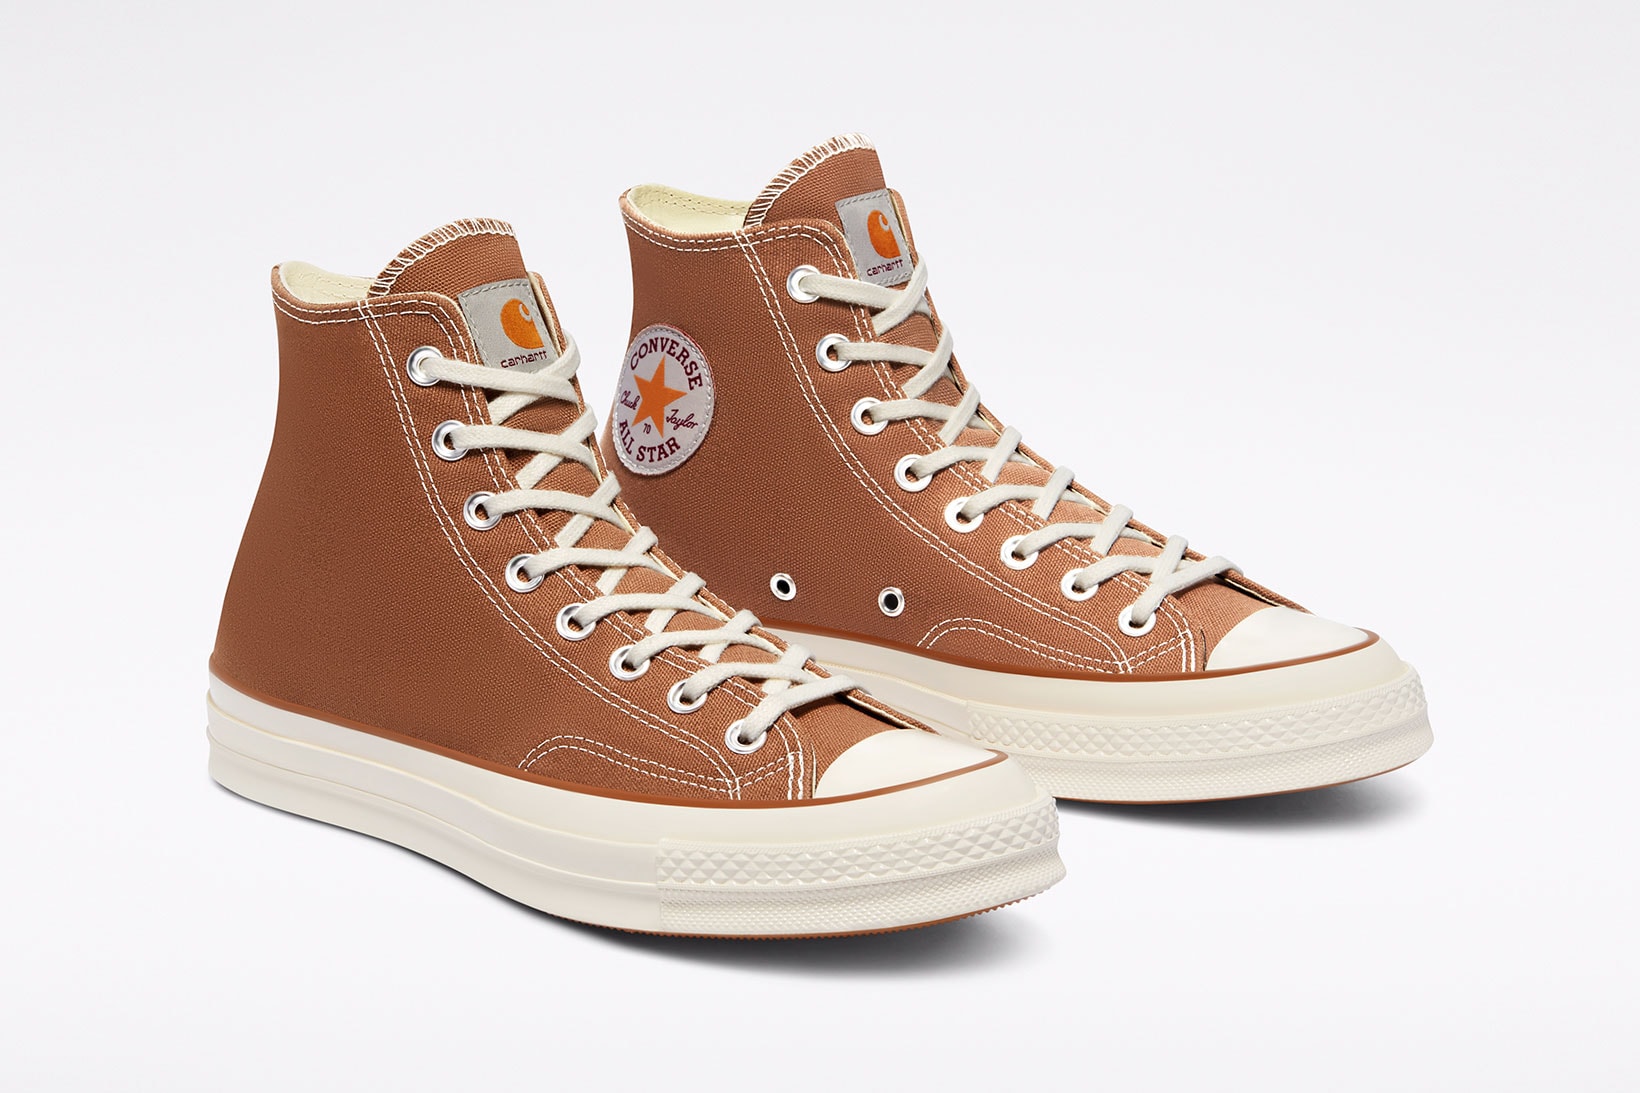 carhartt wip converse chuck 70 icons collaboration sneakers hamilton brown canvas logo details toebox